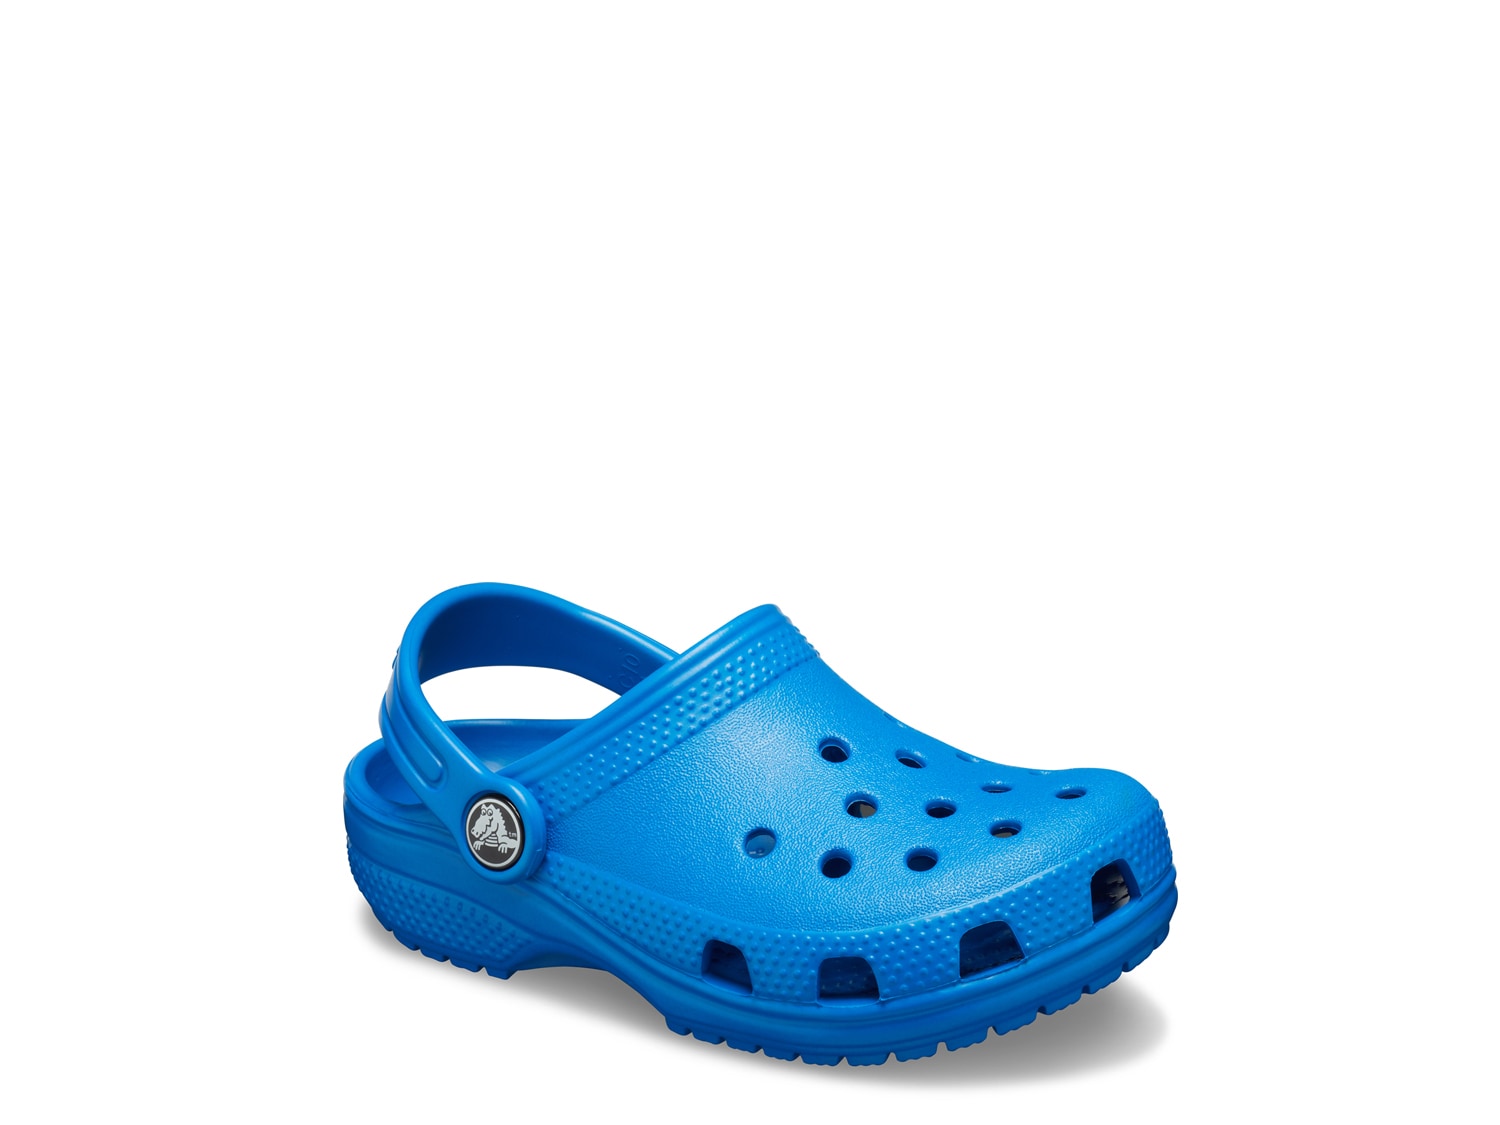 dsw womens shoes crocs